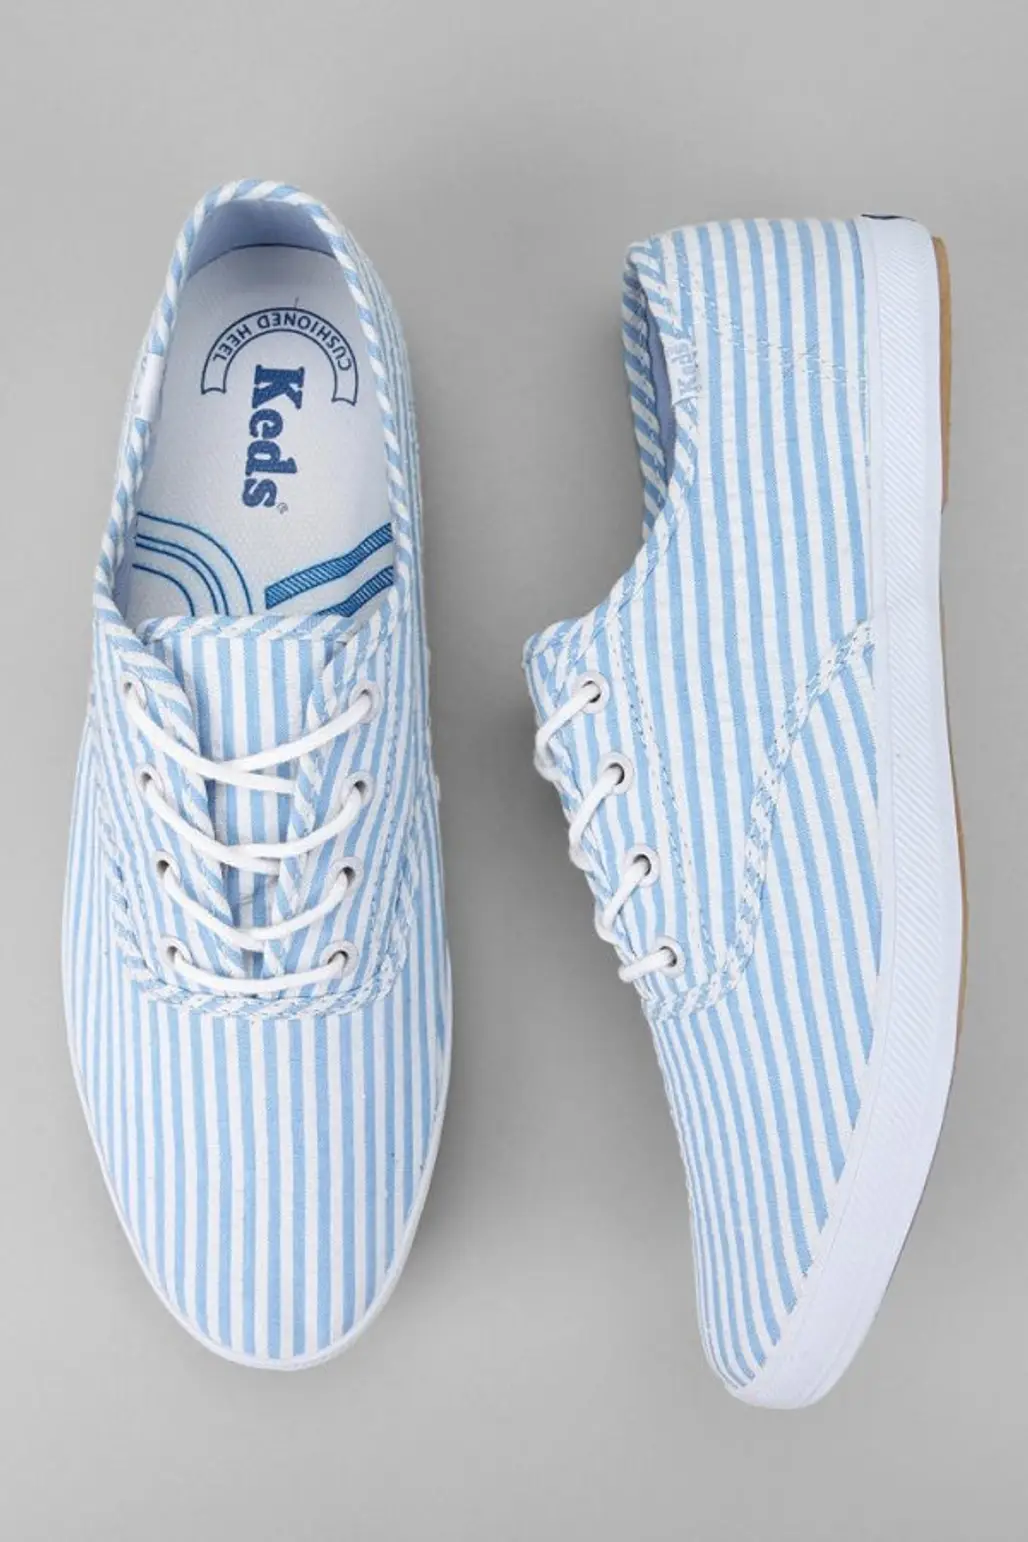 footwear,shoe,white,blue,product,